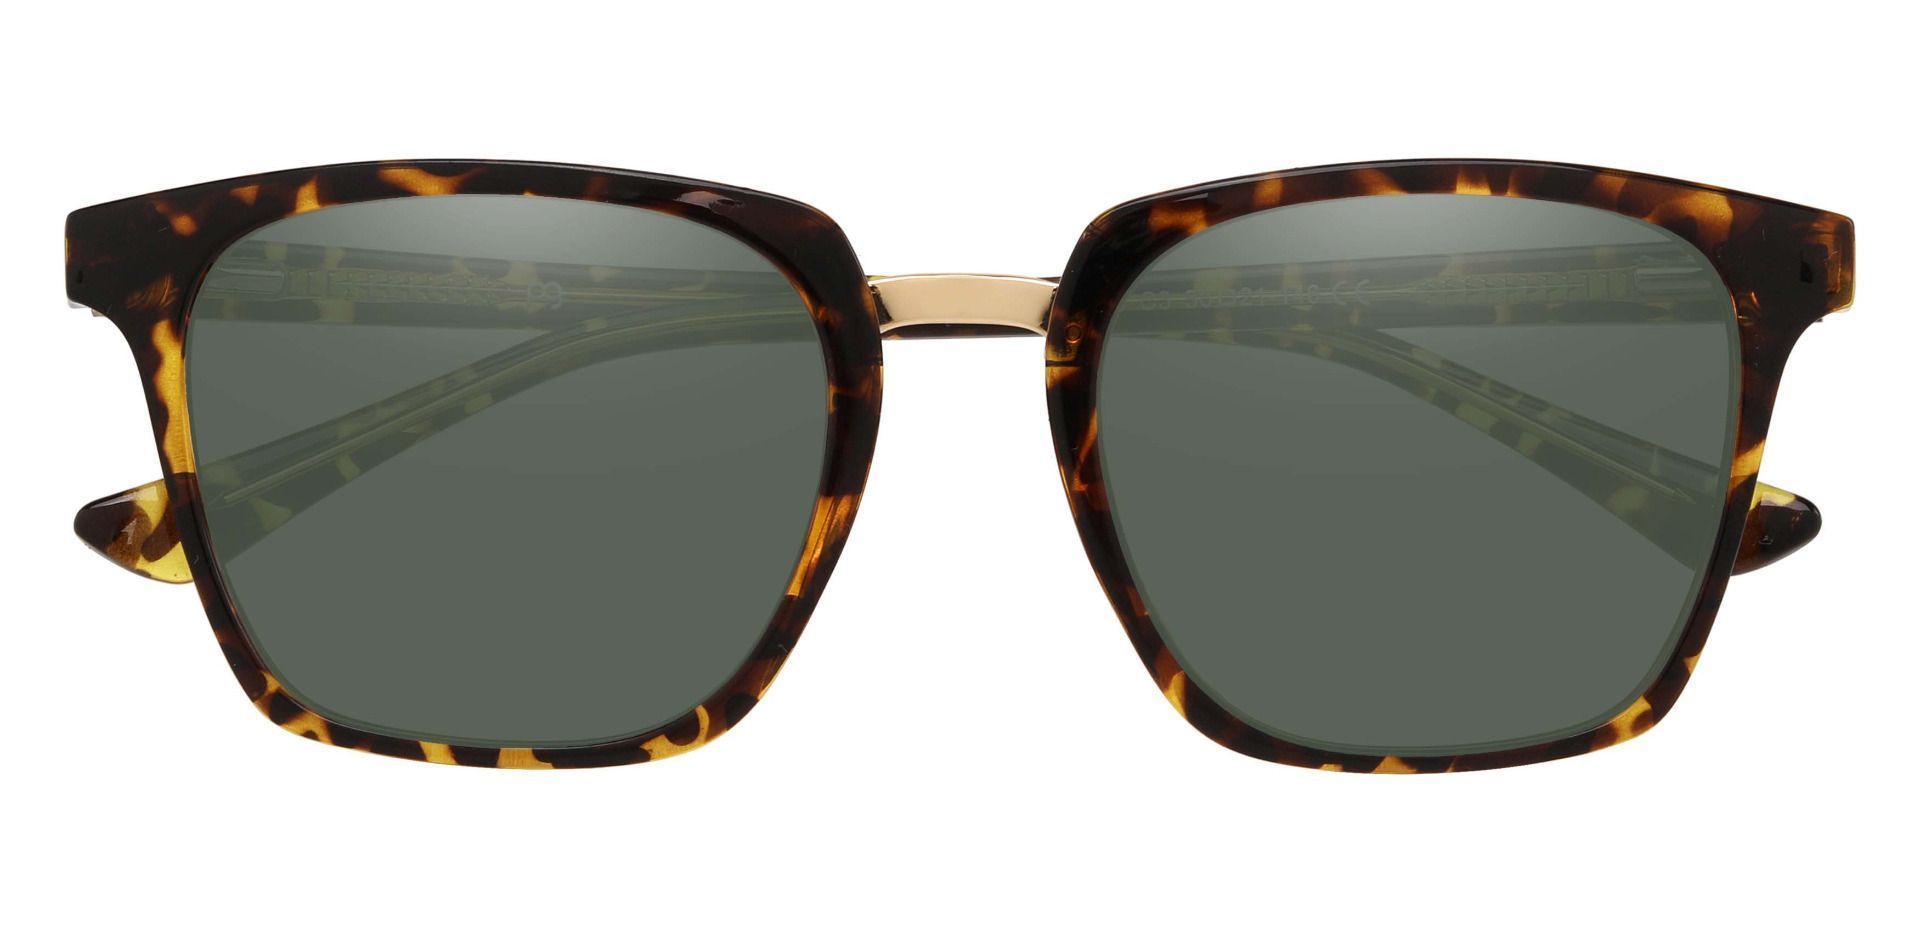 Delta Square Prescription Sunglasses - Tortoise Frame With Green Lenses